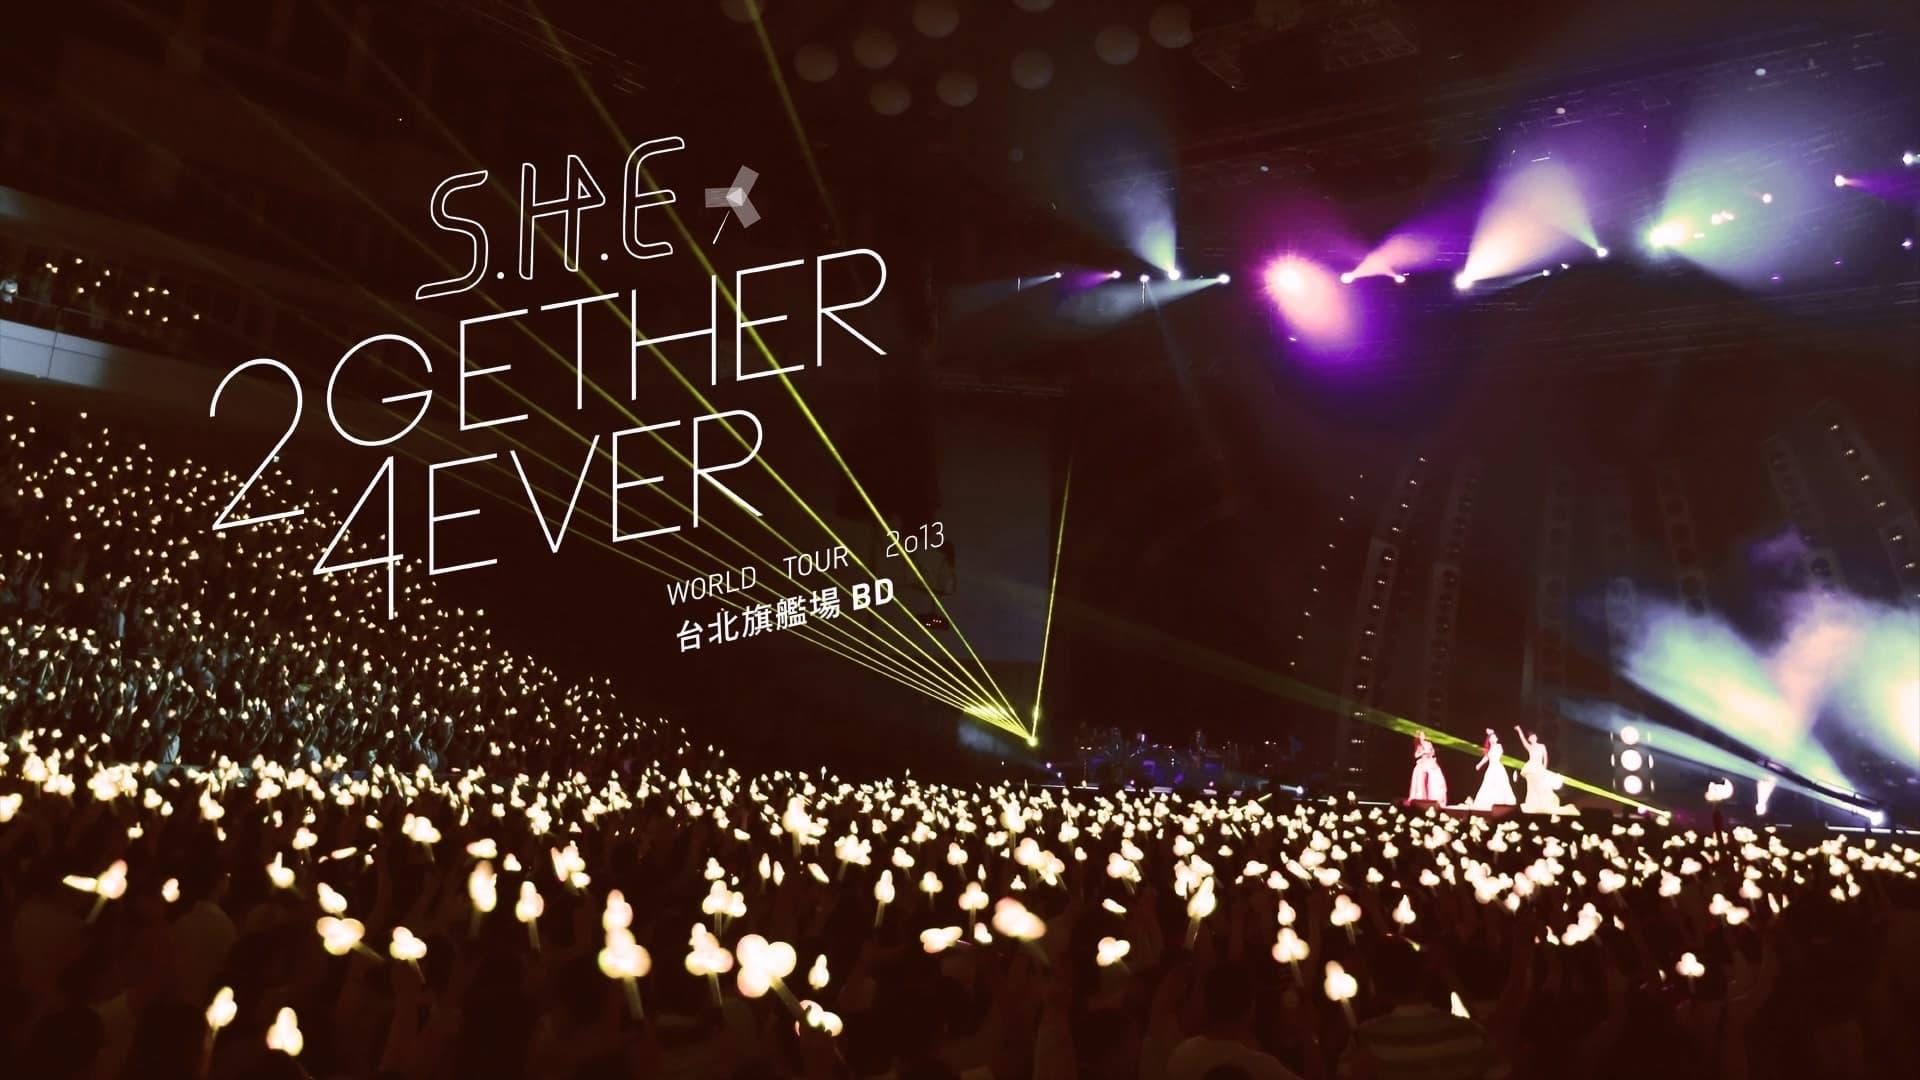 S.H.E 2GETHER 4EVER Live Concert backdrop